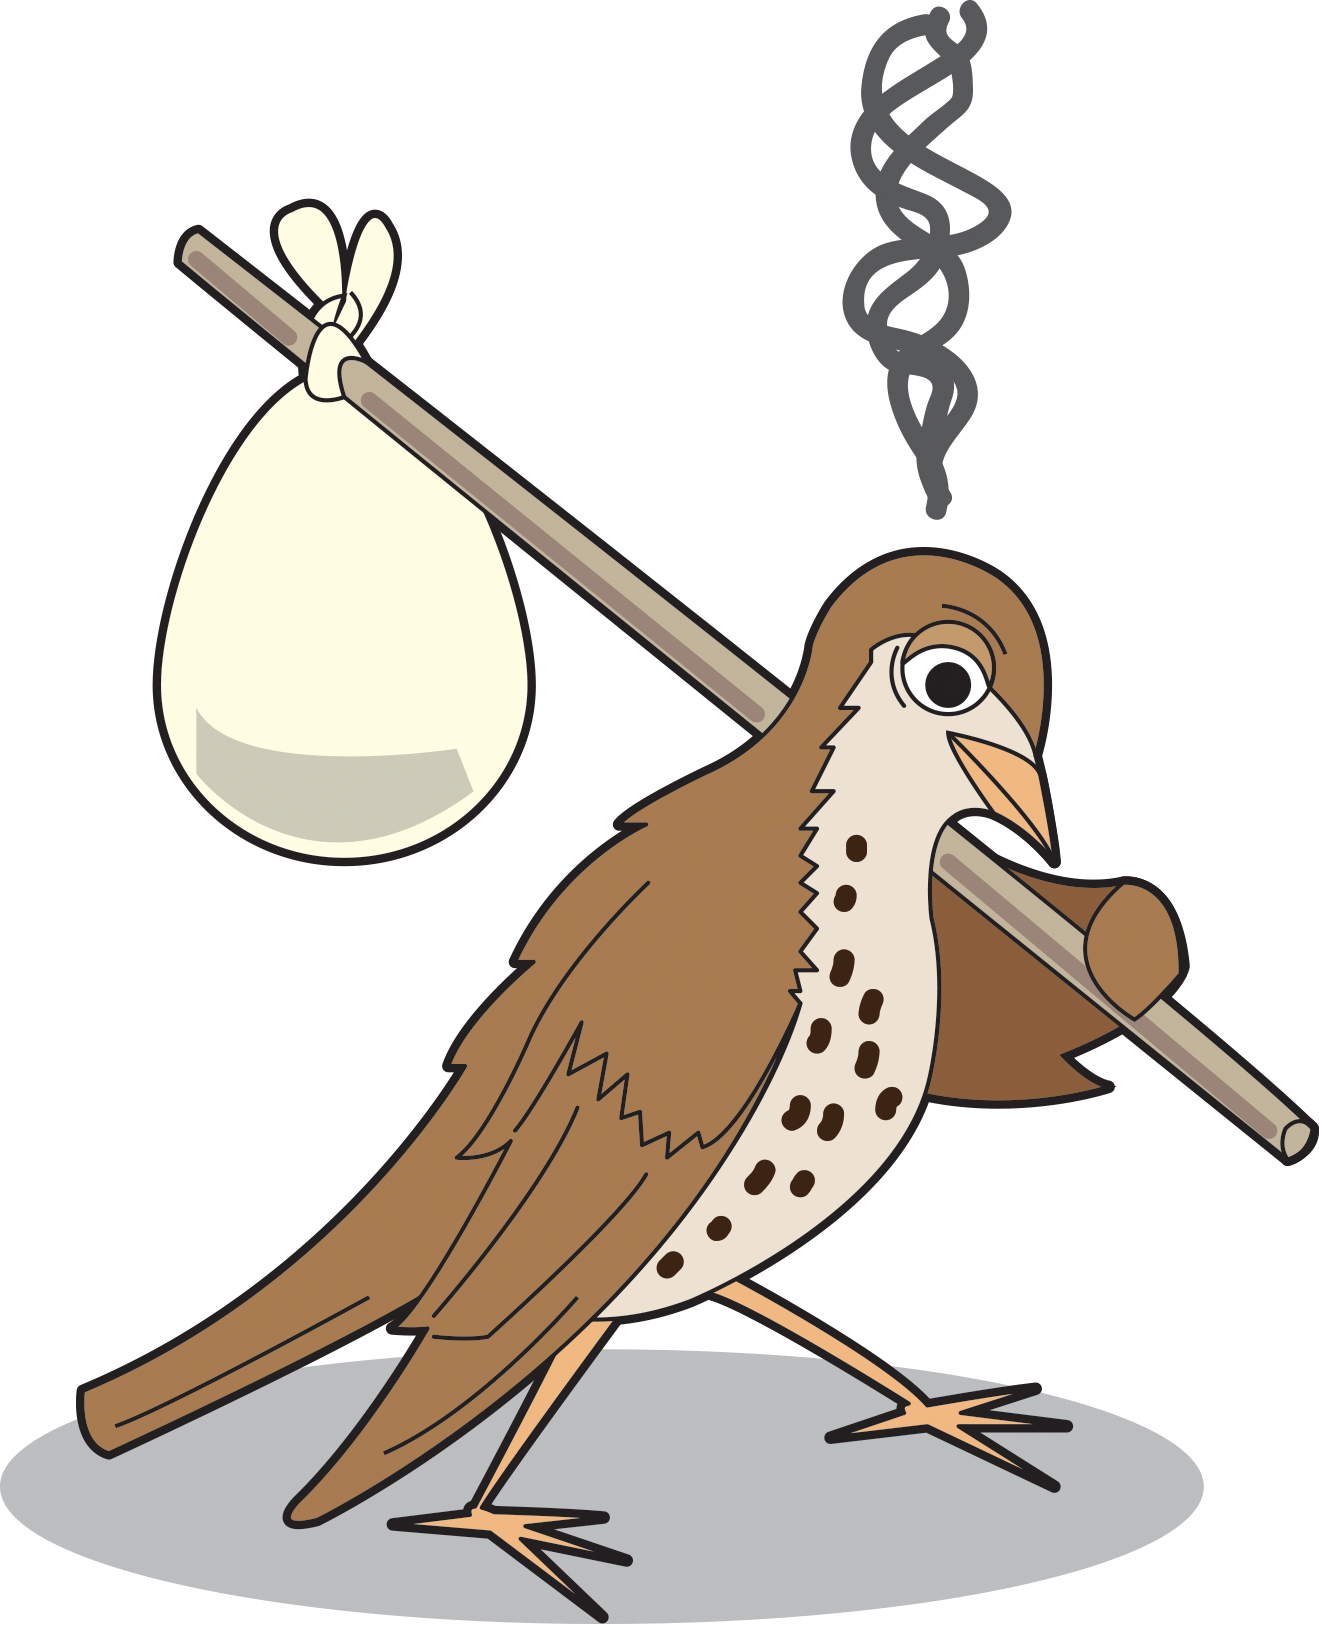 a cartoon of an upset bird with a stick and bindle